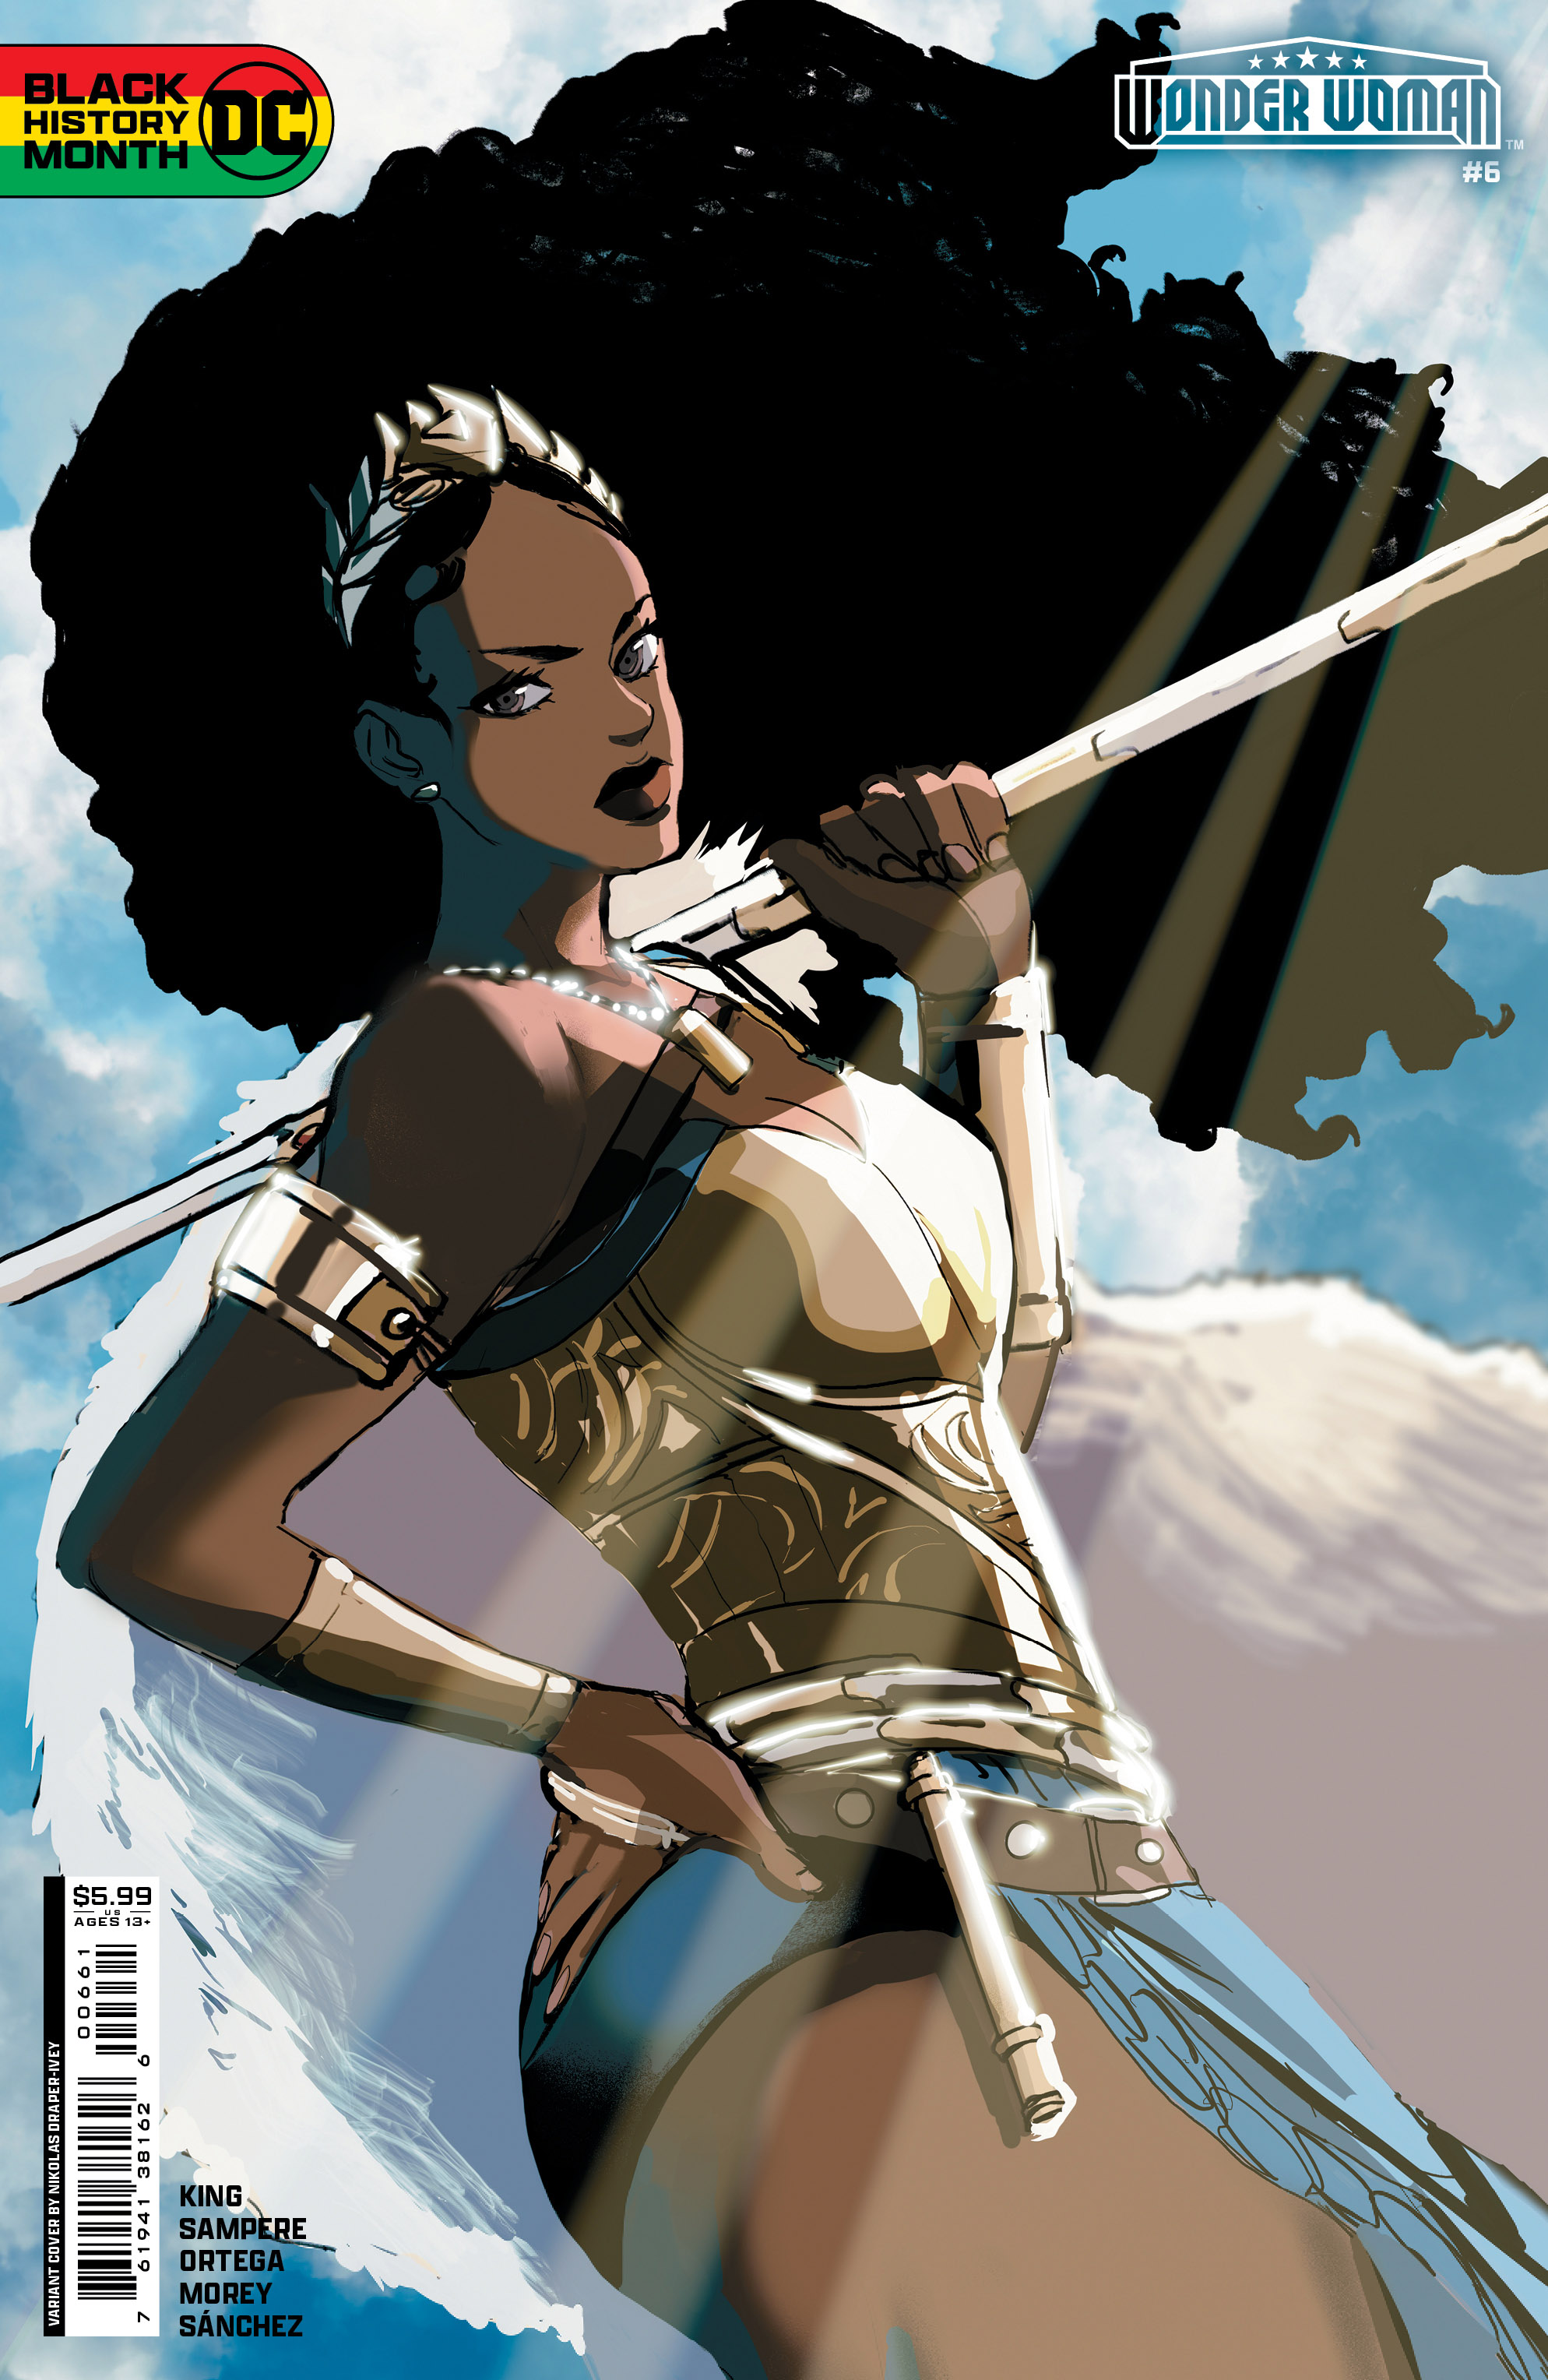 Wonder Woman #6 Cover D Nikolas Draper-Ivey Black History Month Card Stock Variant